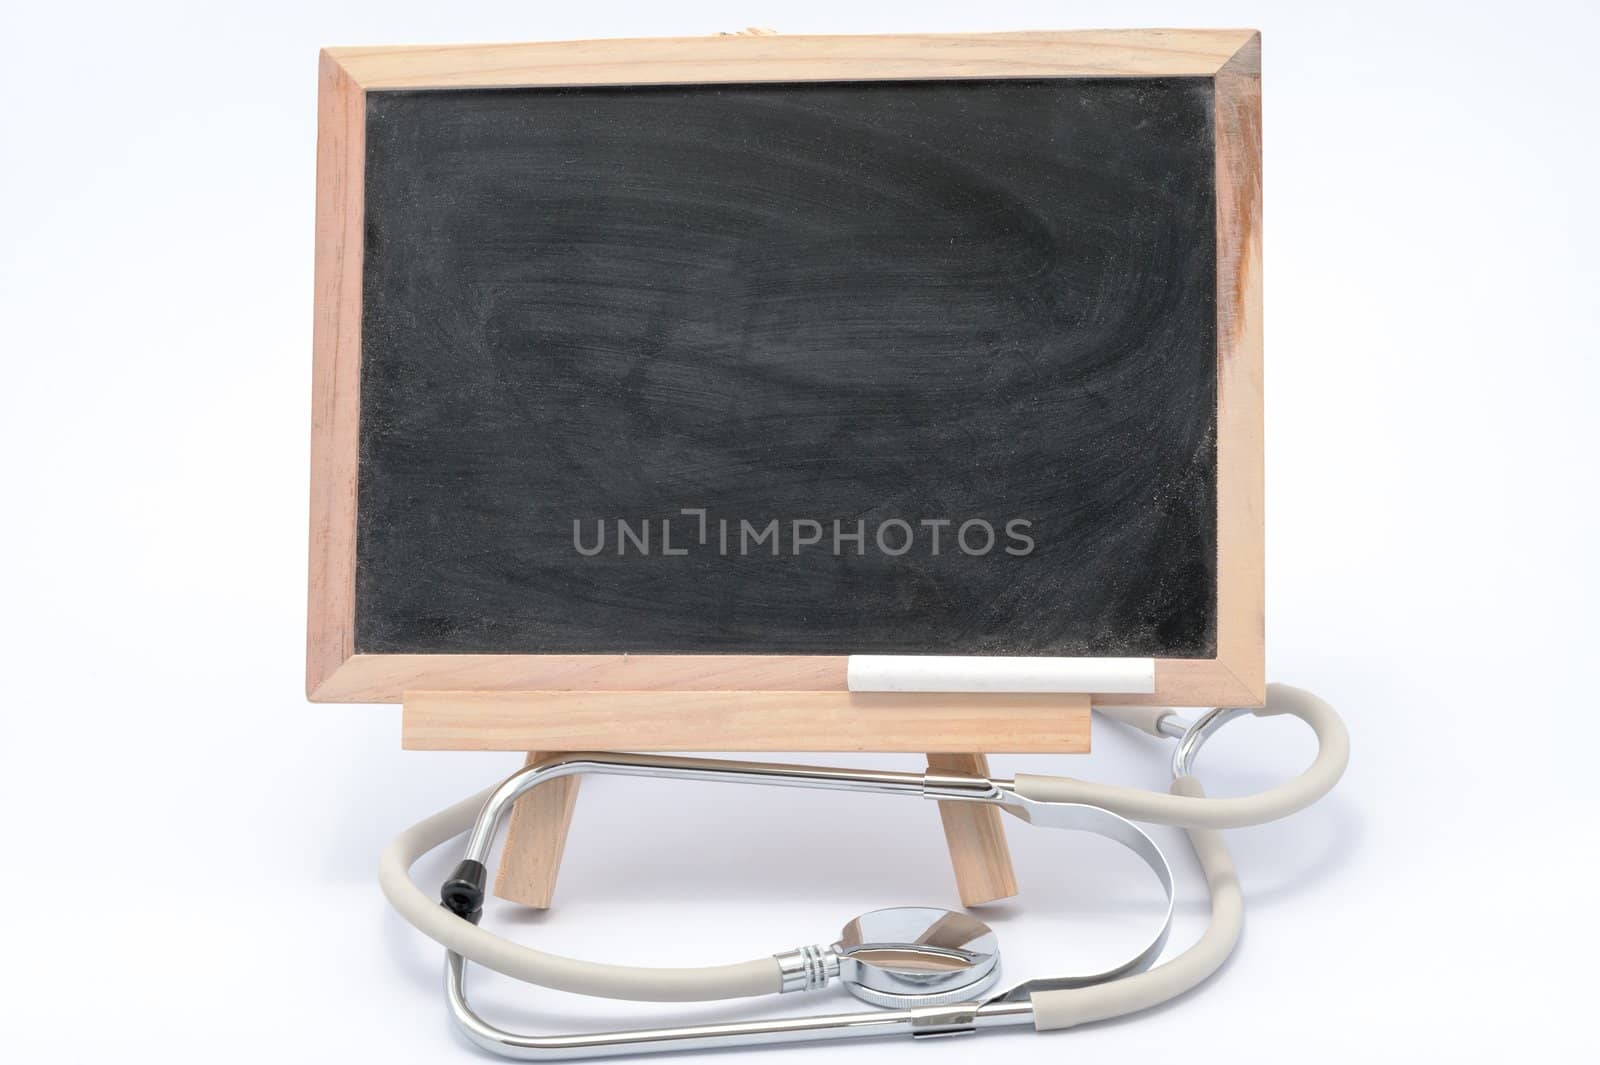 Stethoscope and blackboard by raywoo